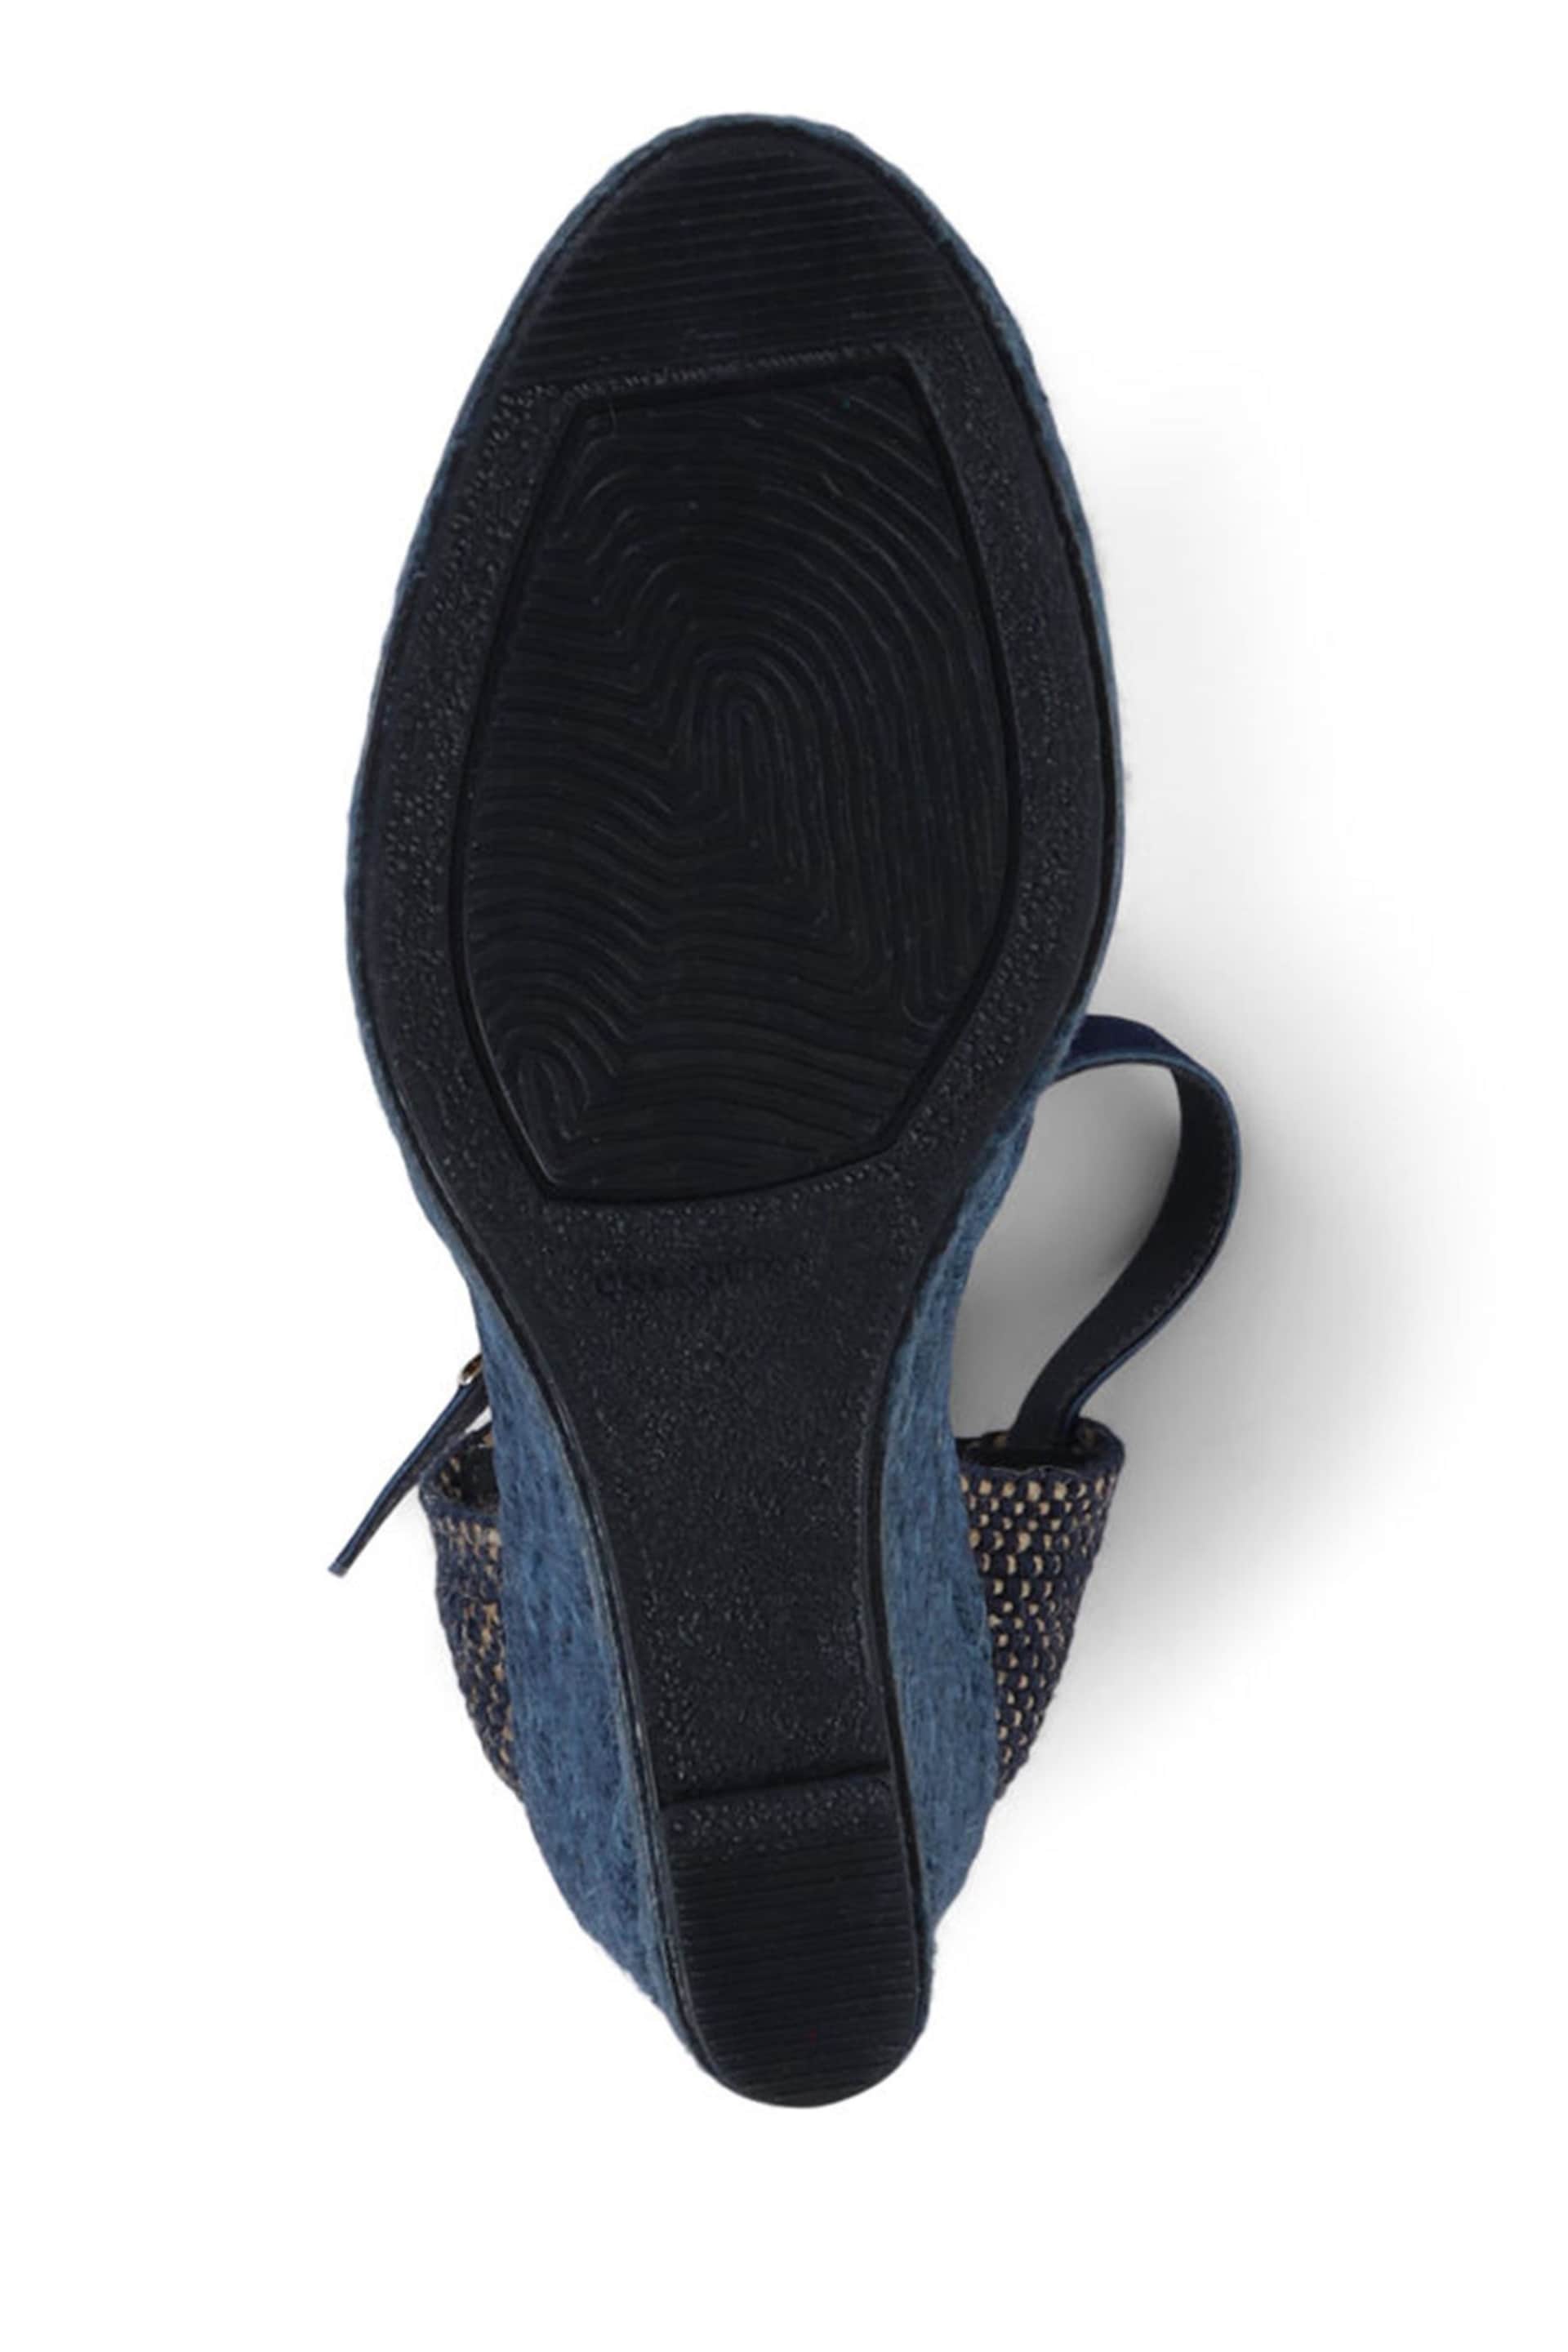 Jones Bootmaker Arabella Wedge Shoes - Image 5 of 5